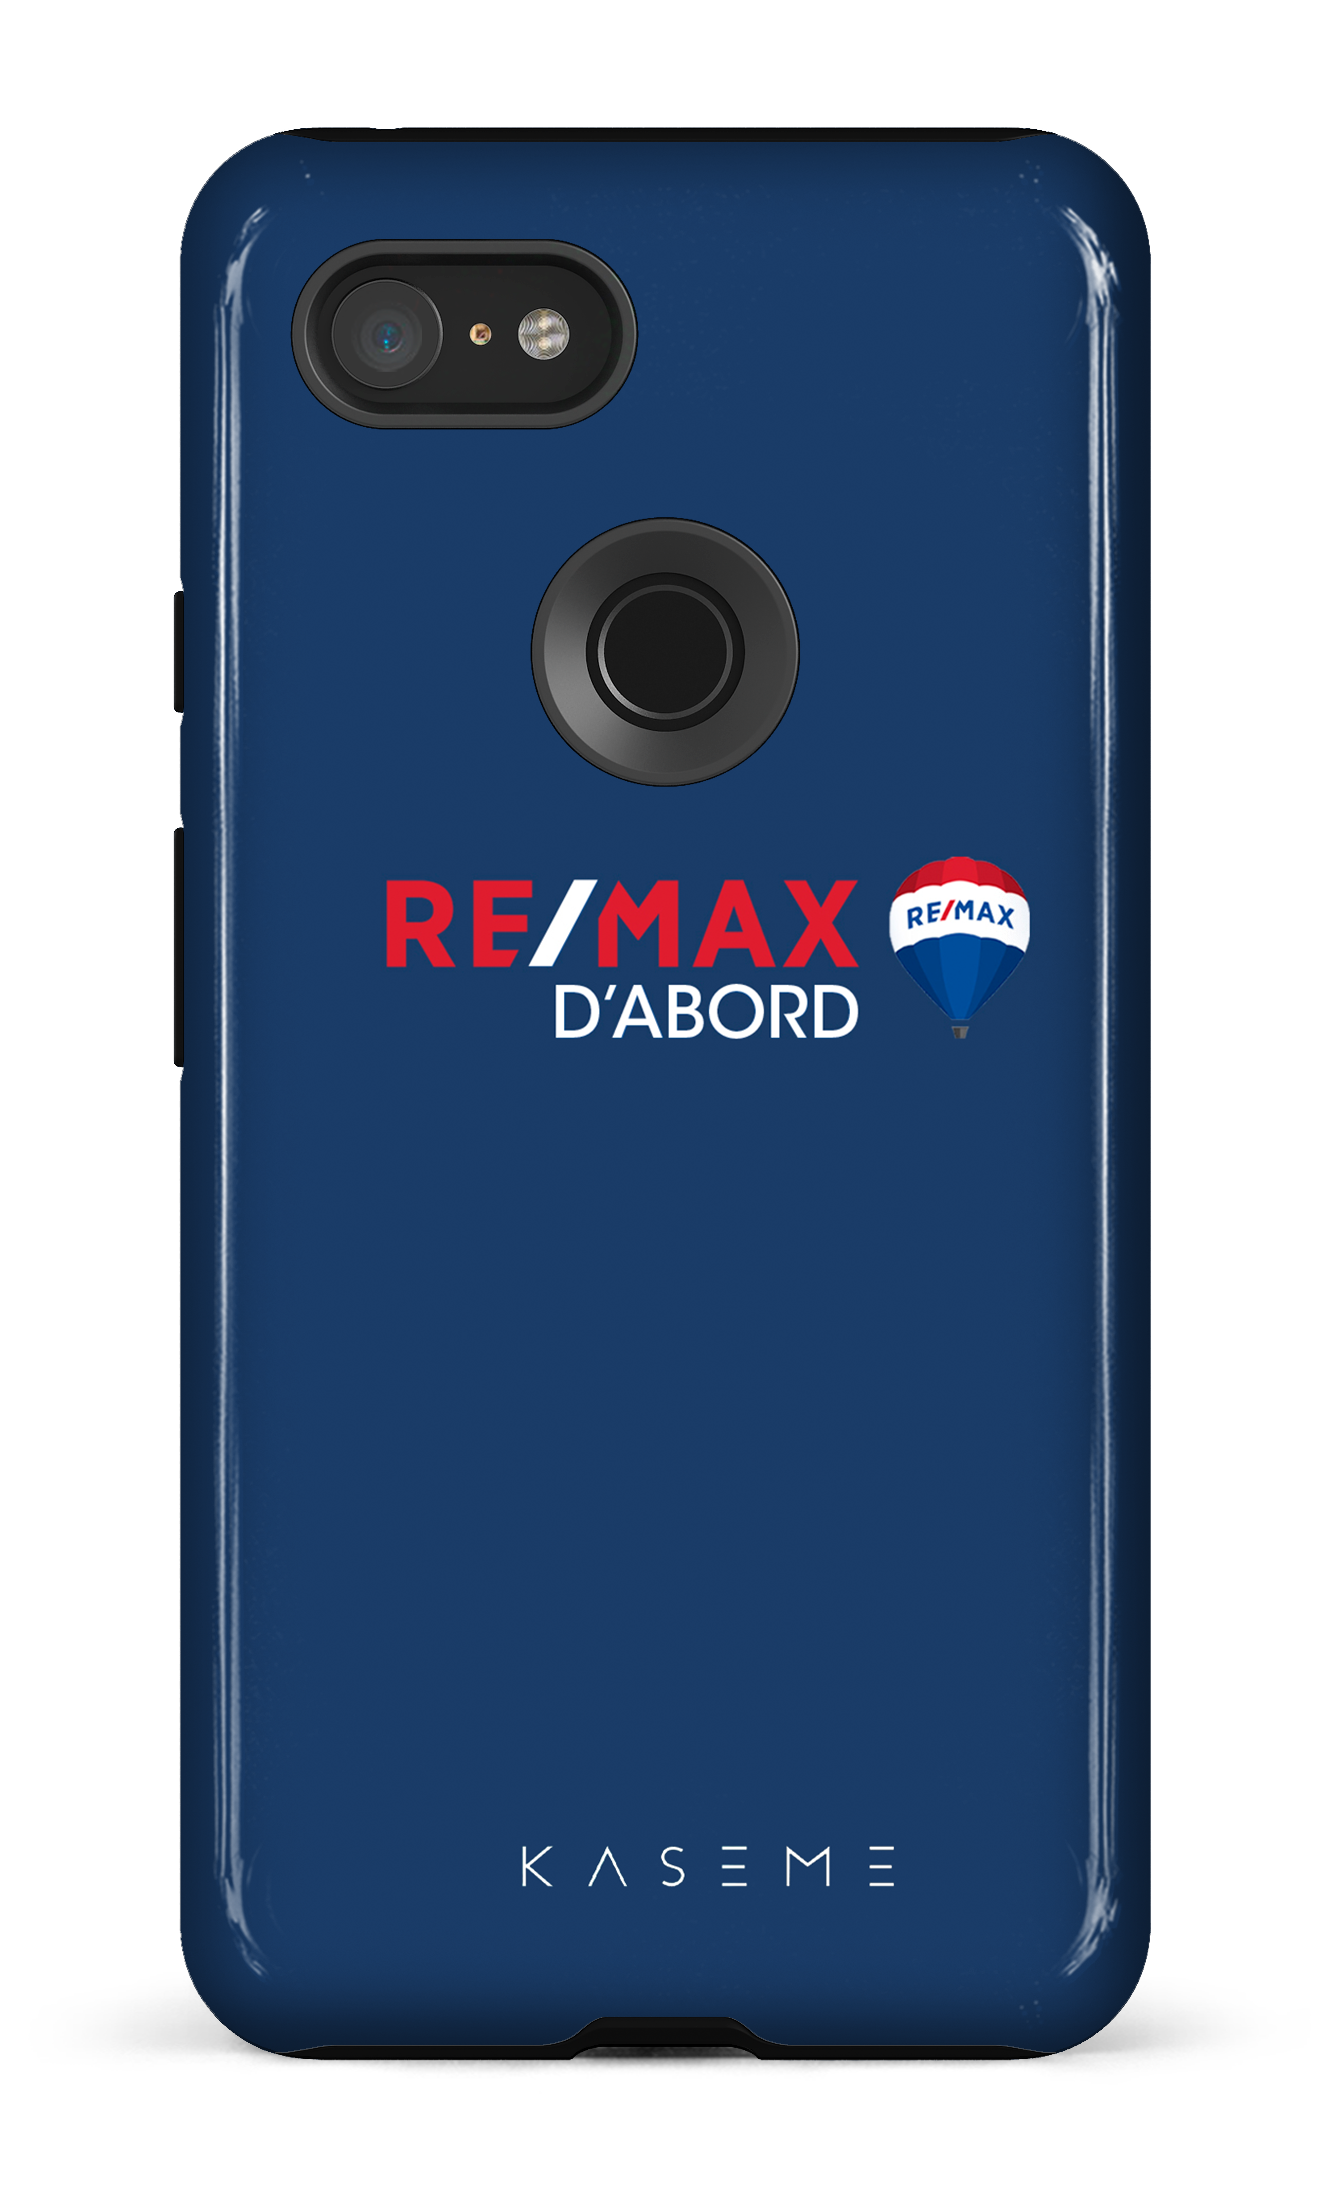 Remax D'abord Bleu - Google Pixel 3 XL